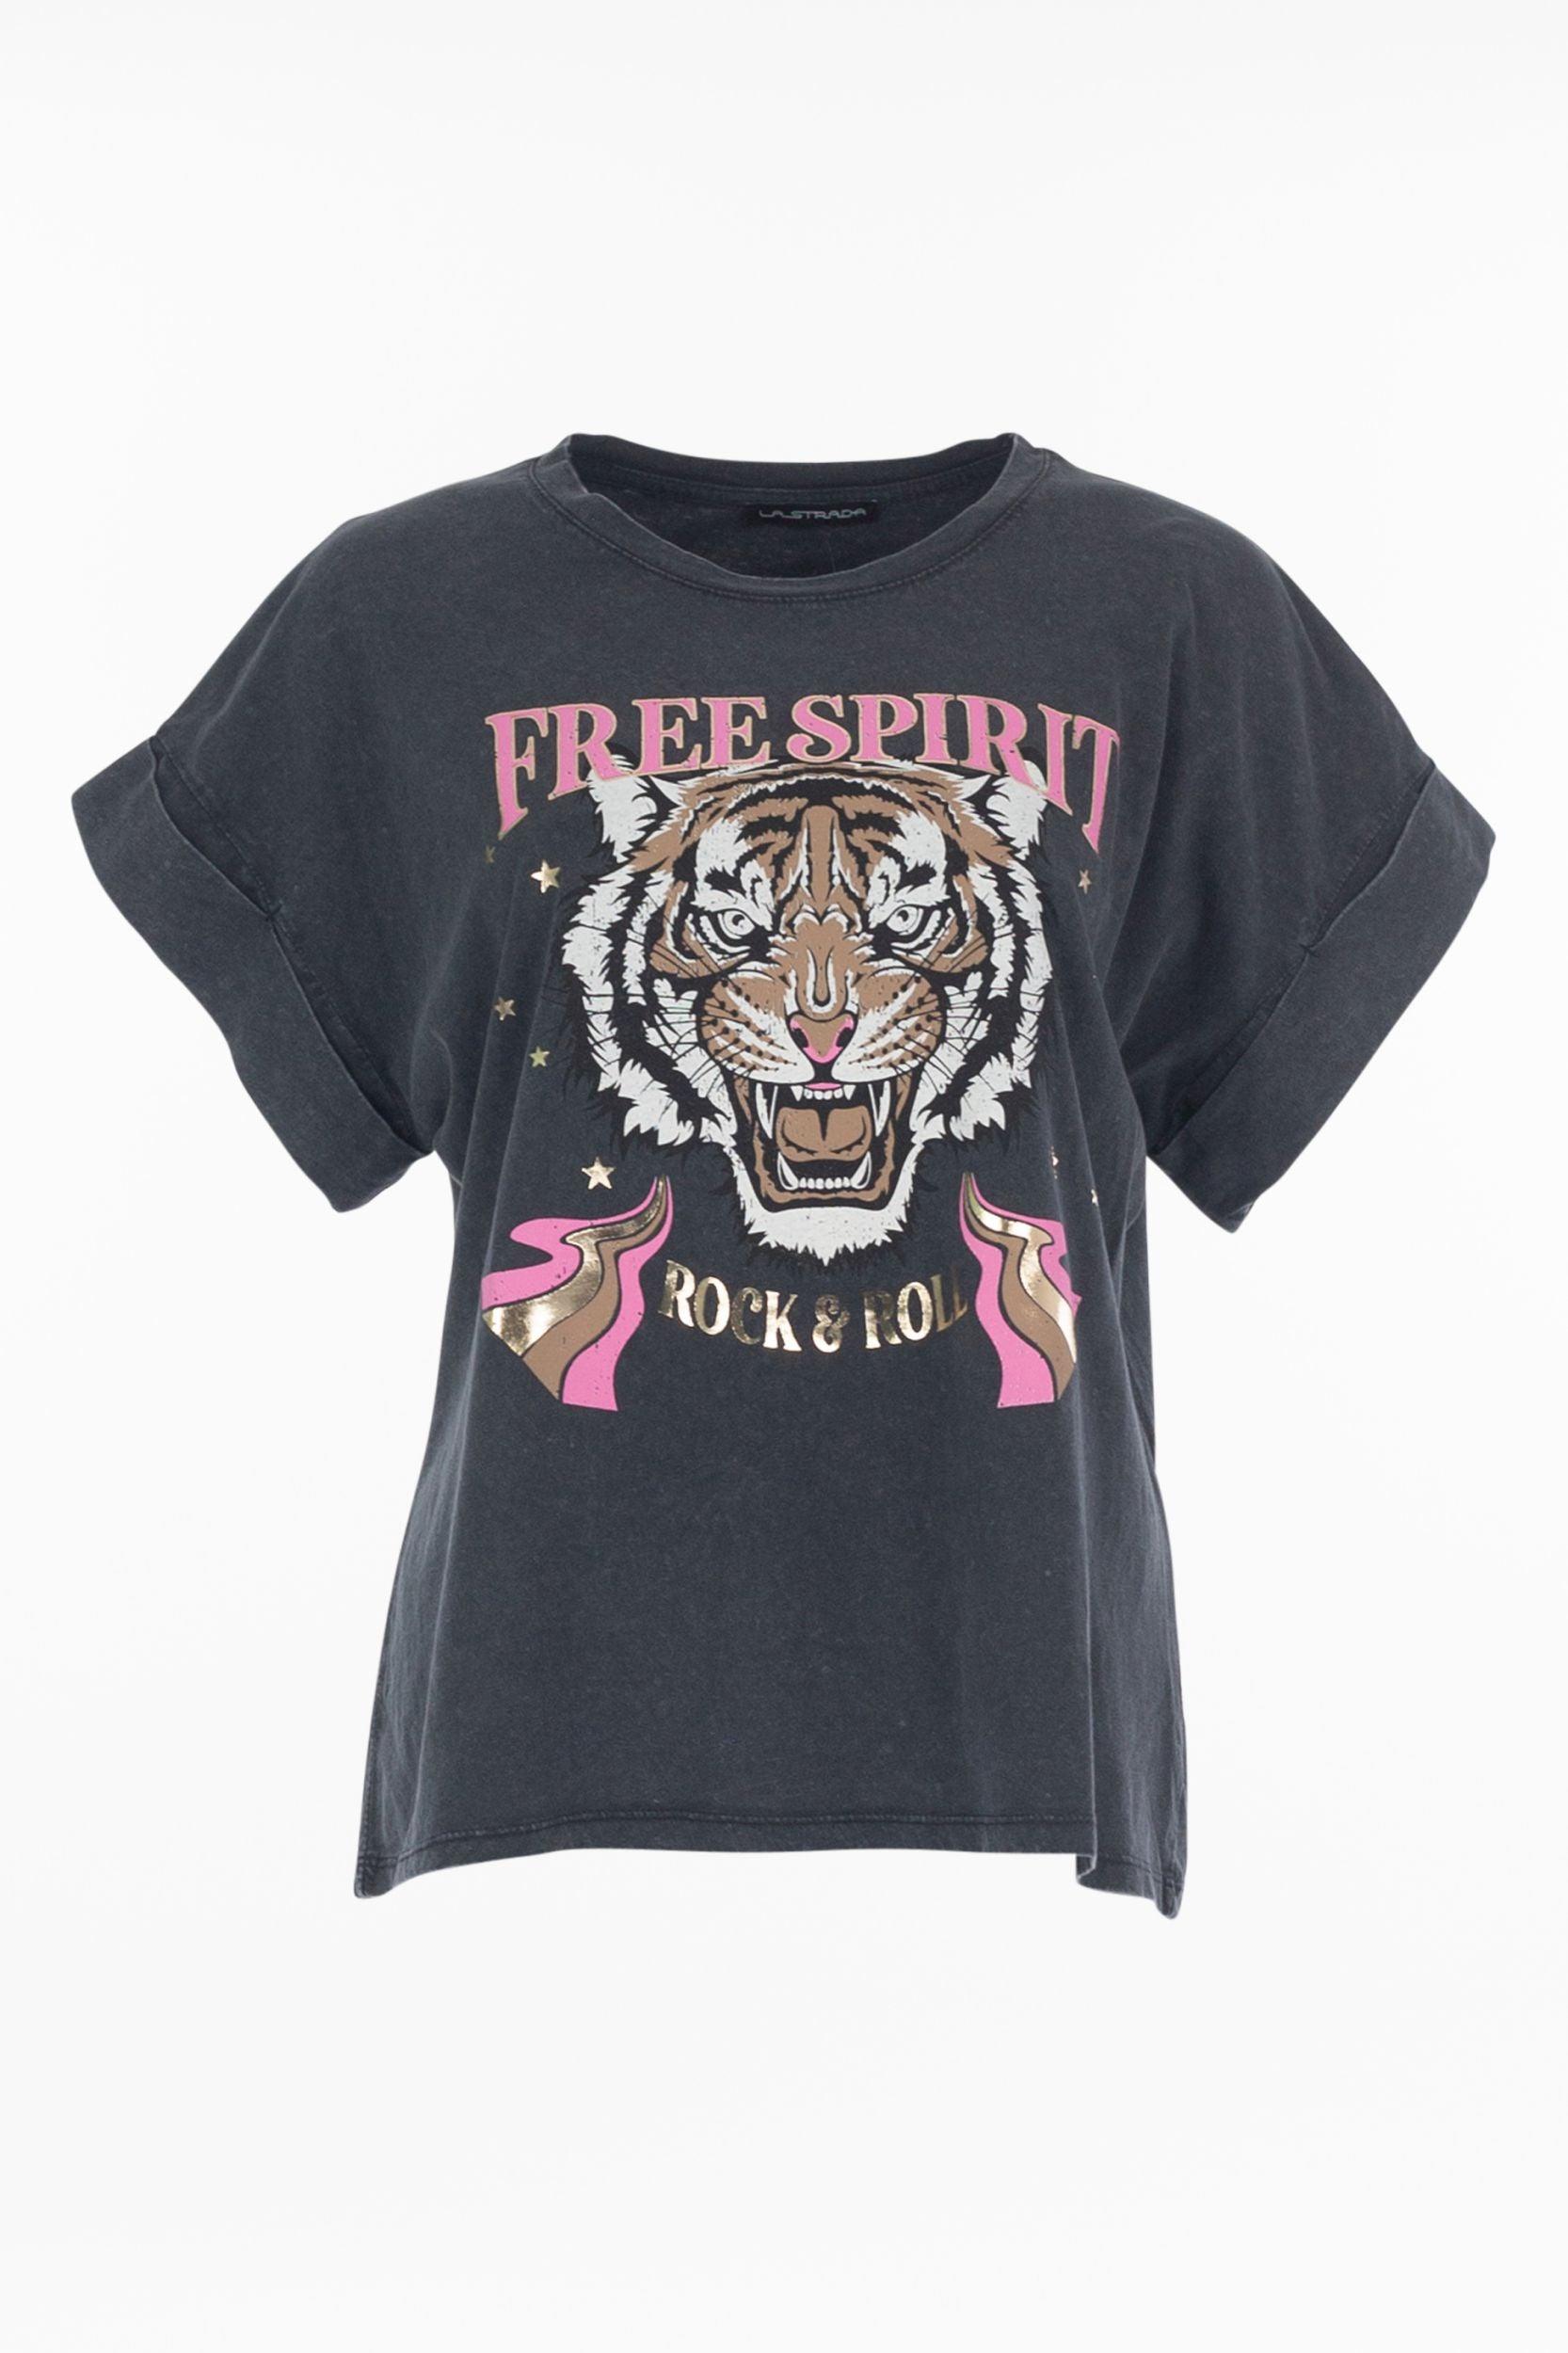 T-Shirt "Free Spirit" - La Strada